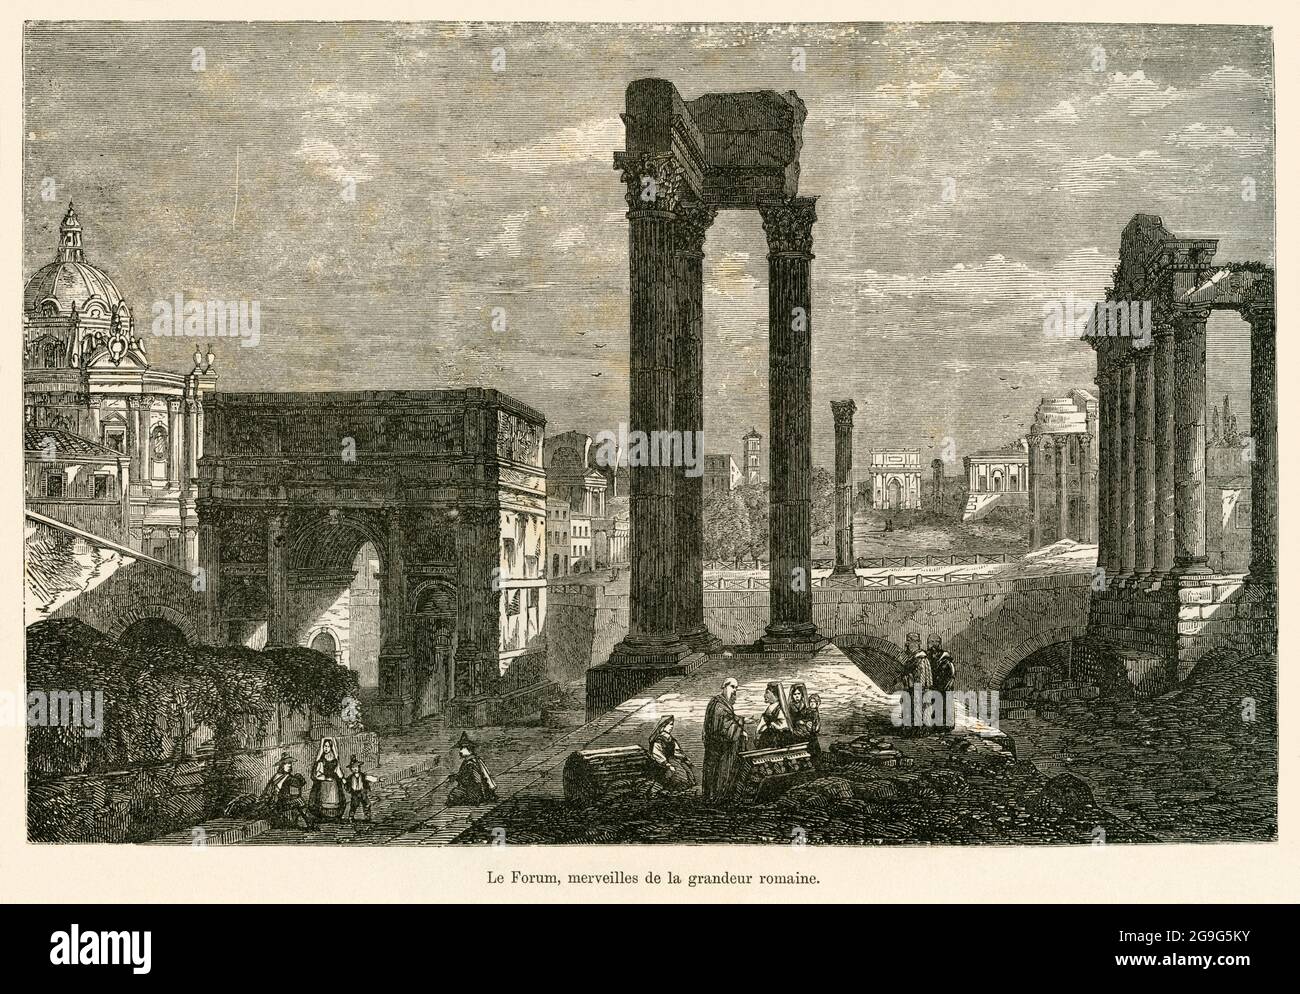 Geographie / Reisen, Italien, Latium, Rom, Originaltext: 'Le Forum, merveilles de la großartige romaine', ZUSÄTZLICHE-RIGHTS-CLEARANCE-INFO-NOT-AVAILABLE Stockfoto